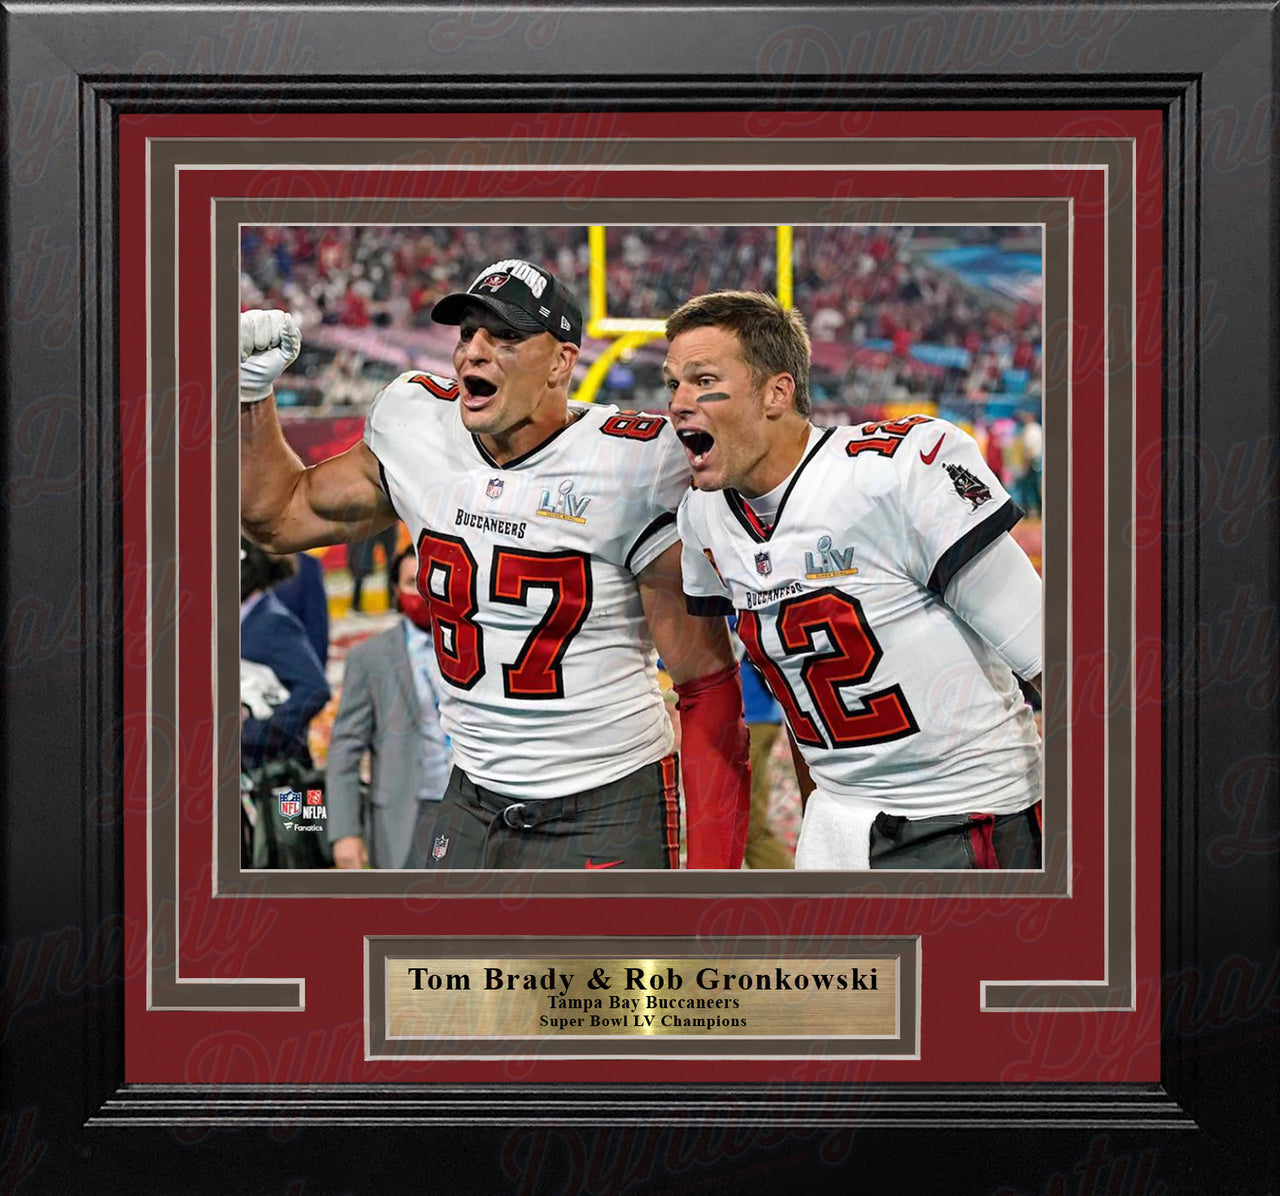 Tom Brady & Rob Gronkowski Super Bowl LV Champions Tampa Bay Buccaneers 8x10 Framed Football Photo - Dynasty Sports & Framing 